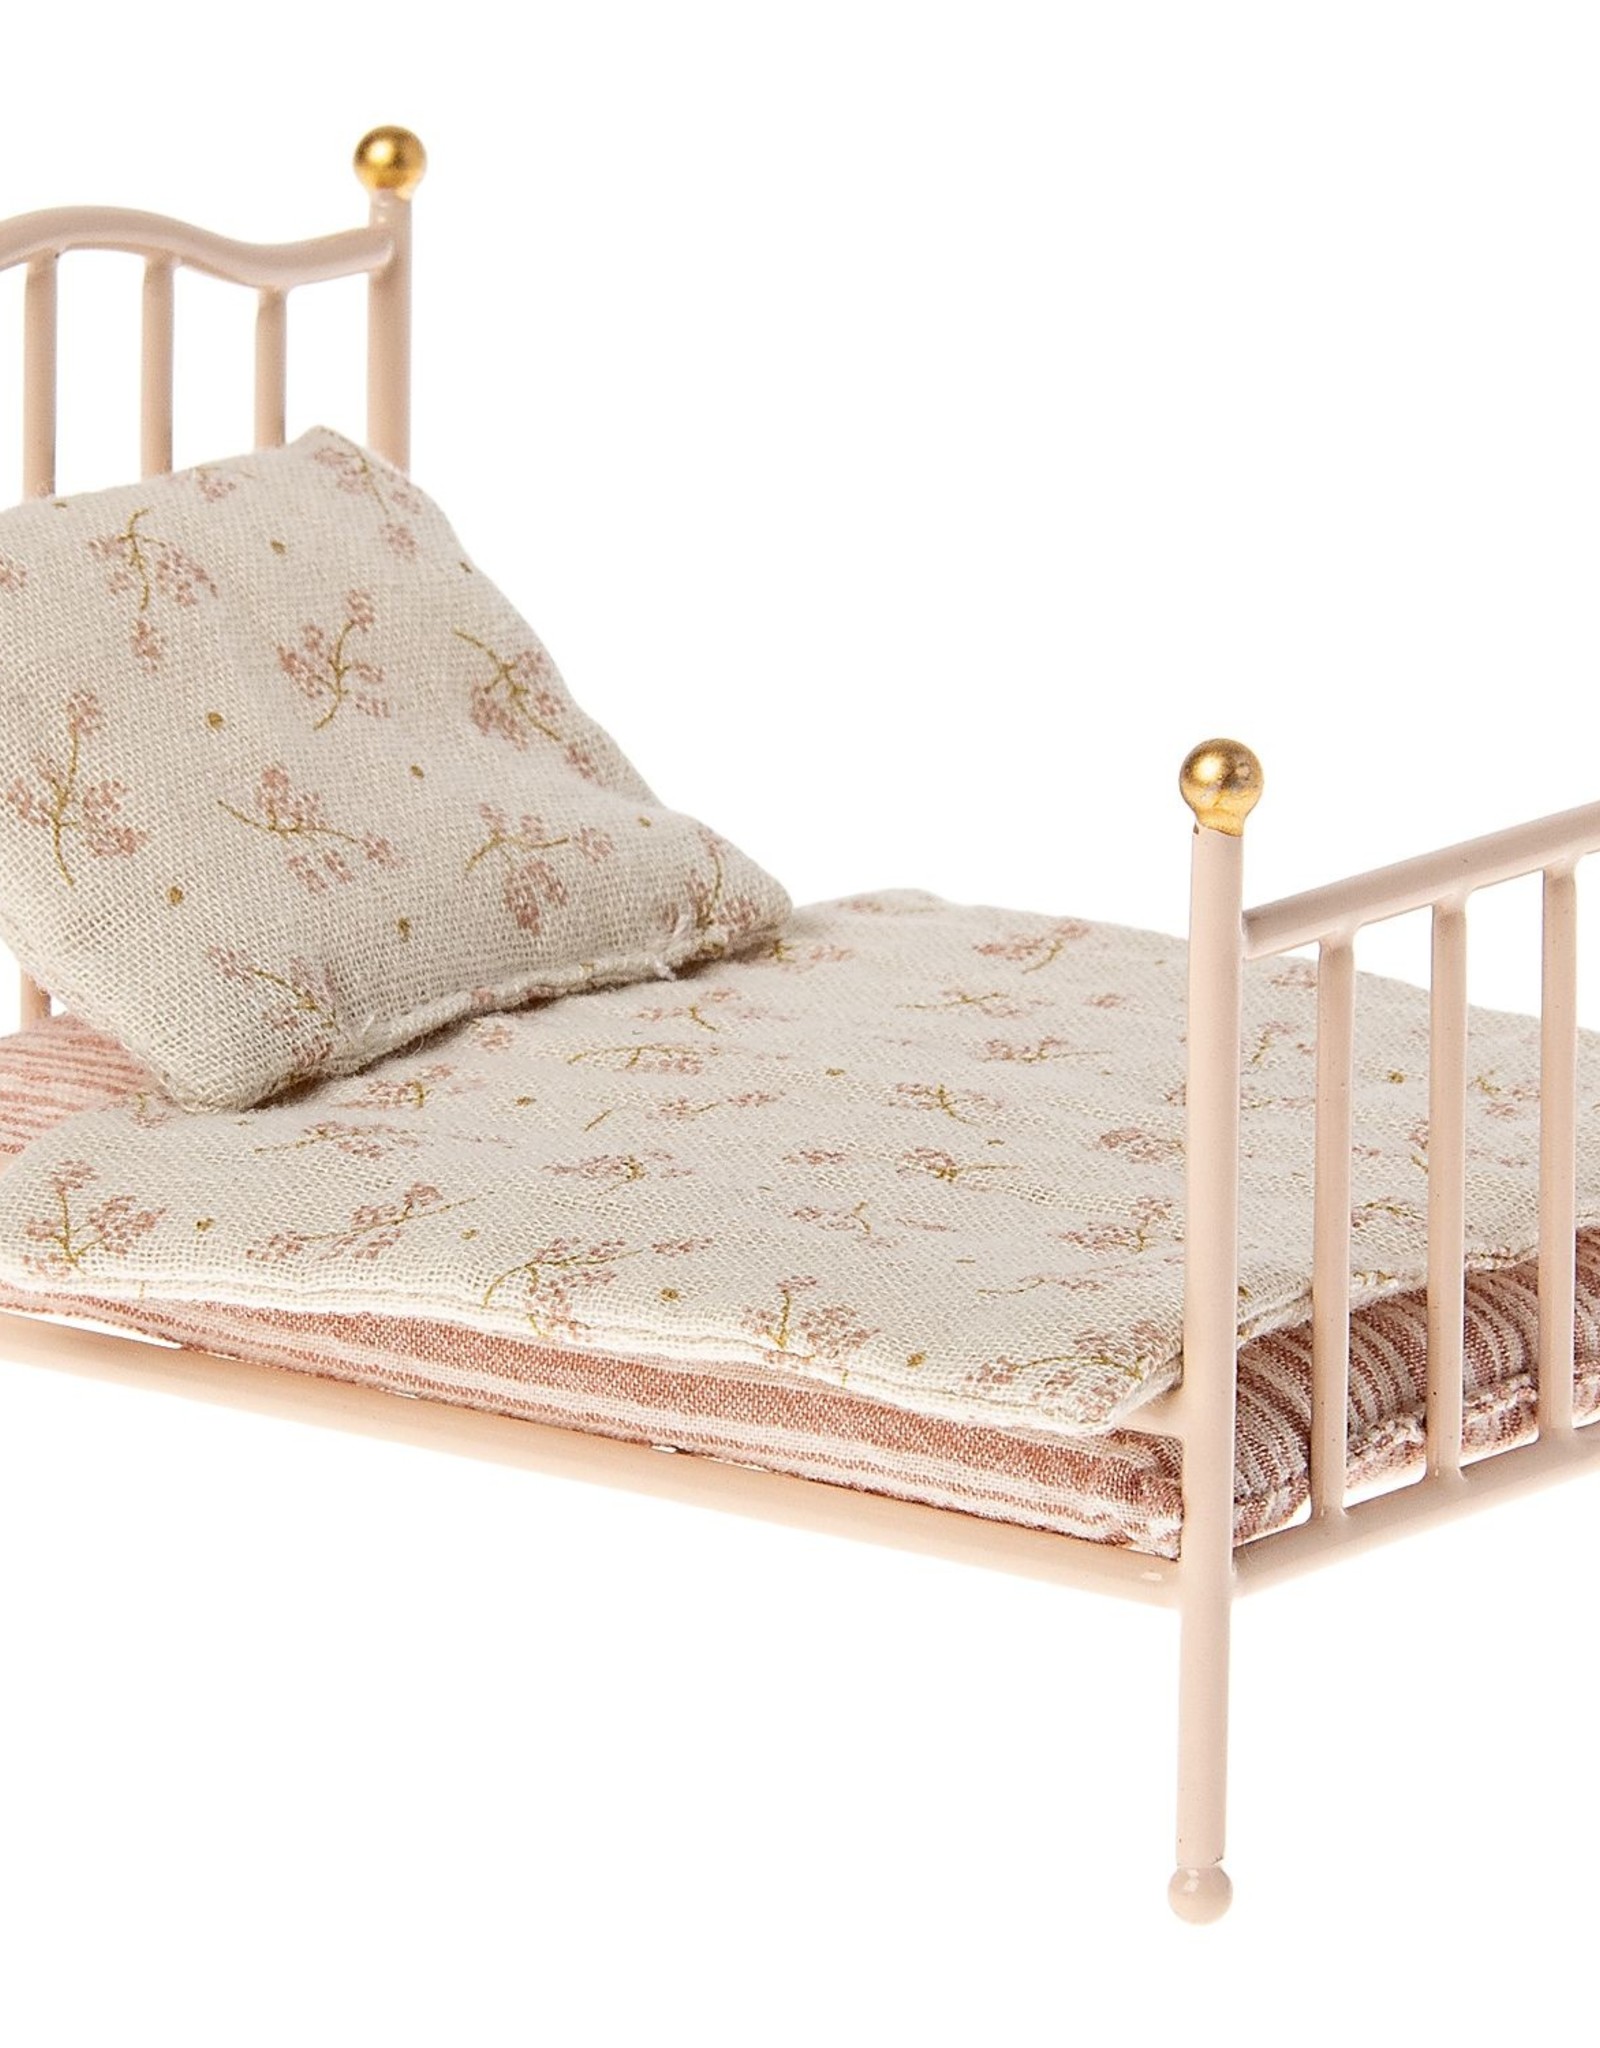 Maileg vintage bed, mouse- rose